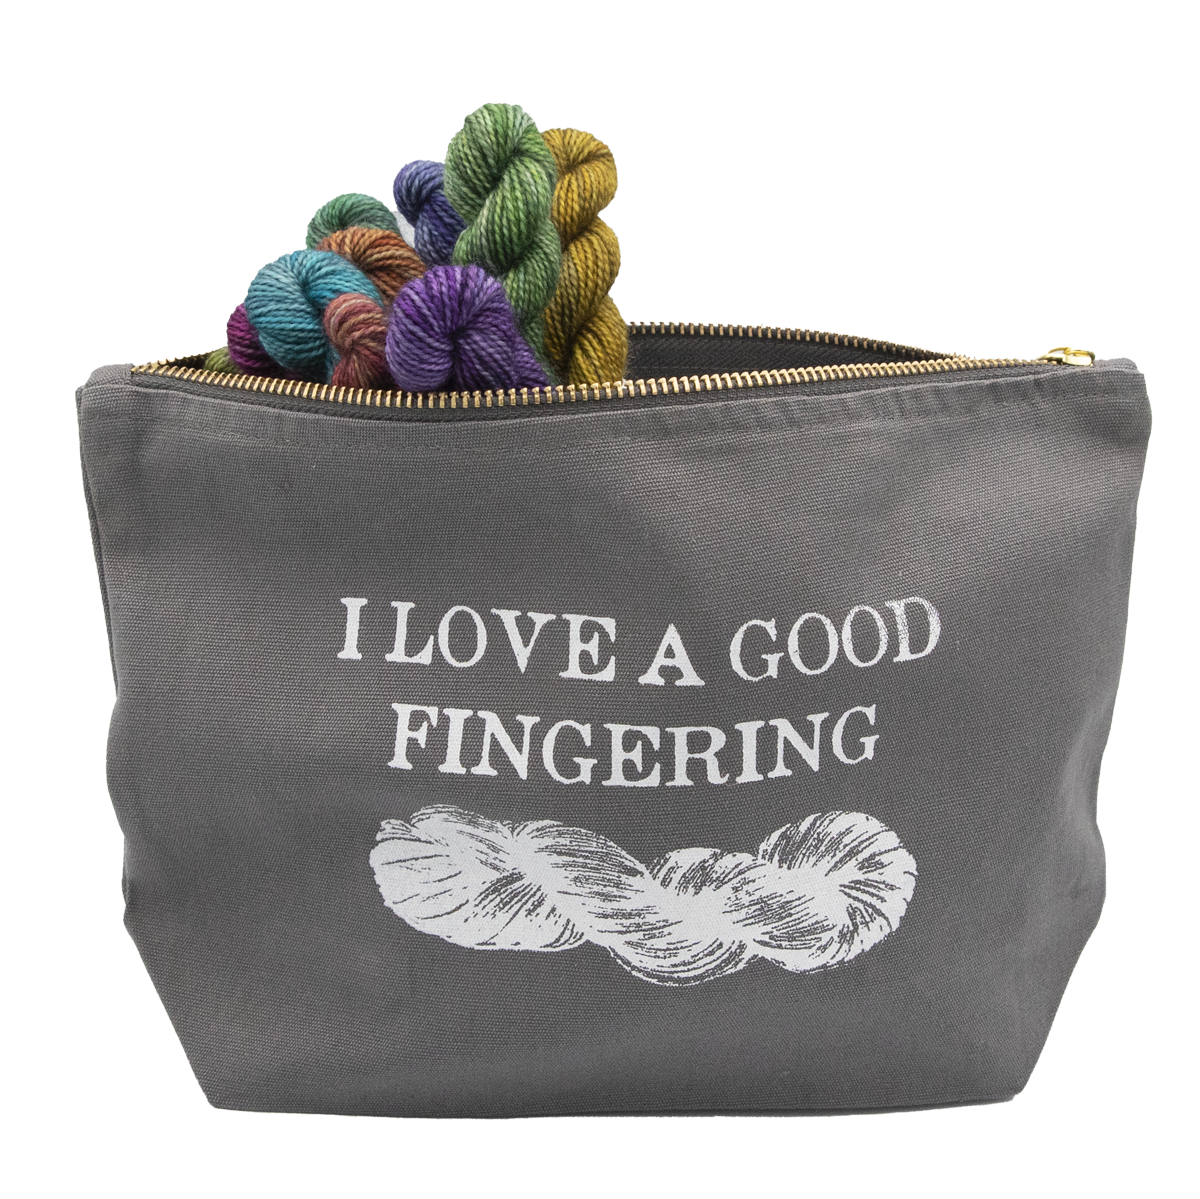 I love a good fingering screen printed cotton bag